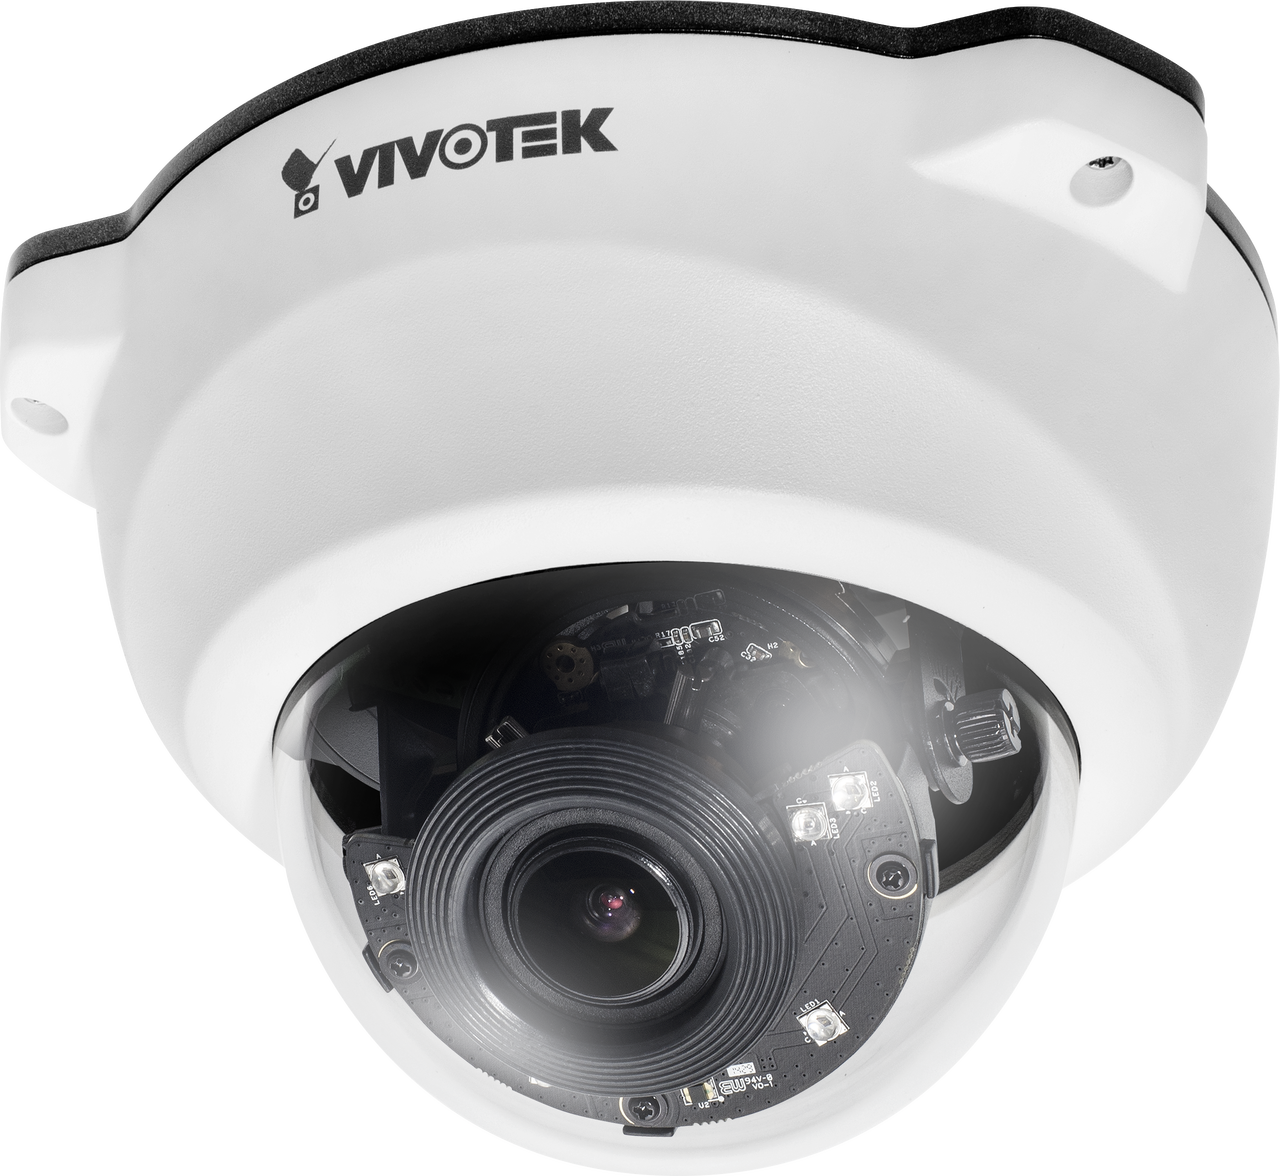 Vivotek FD8338-HV Bullet Network Camera